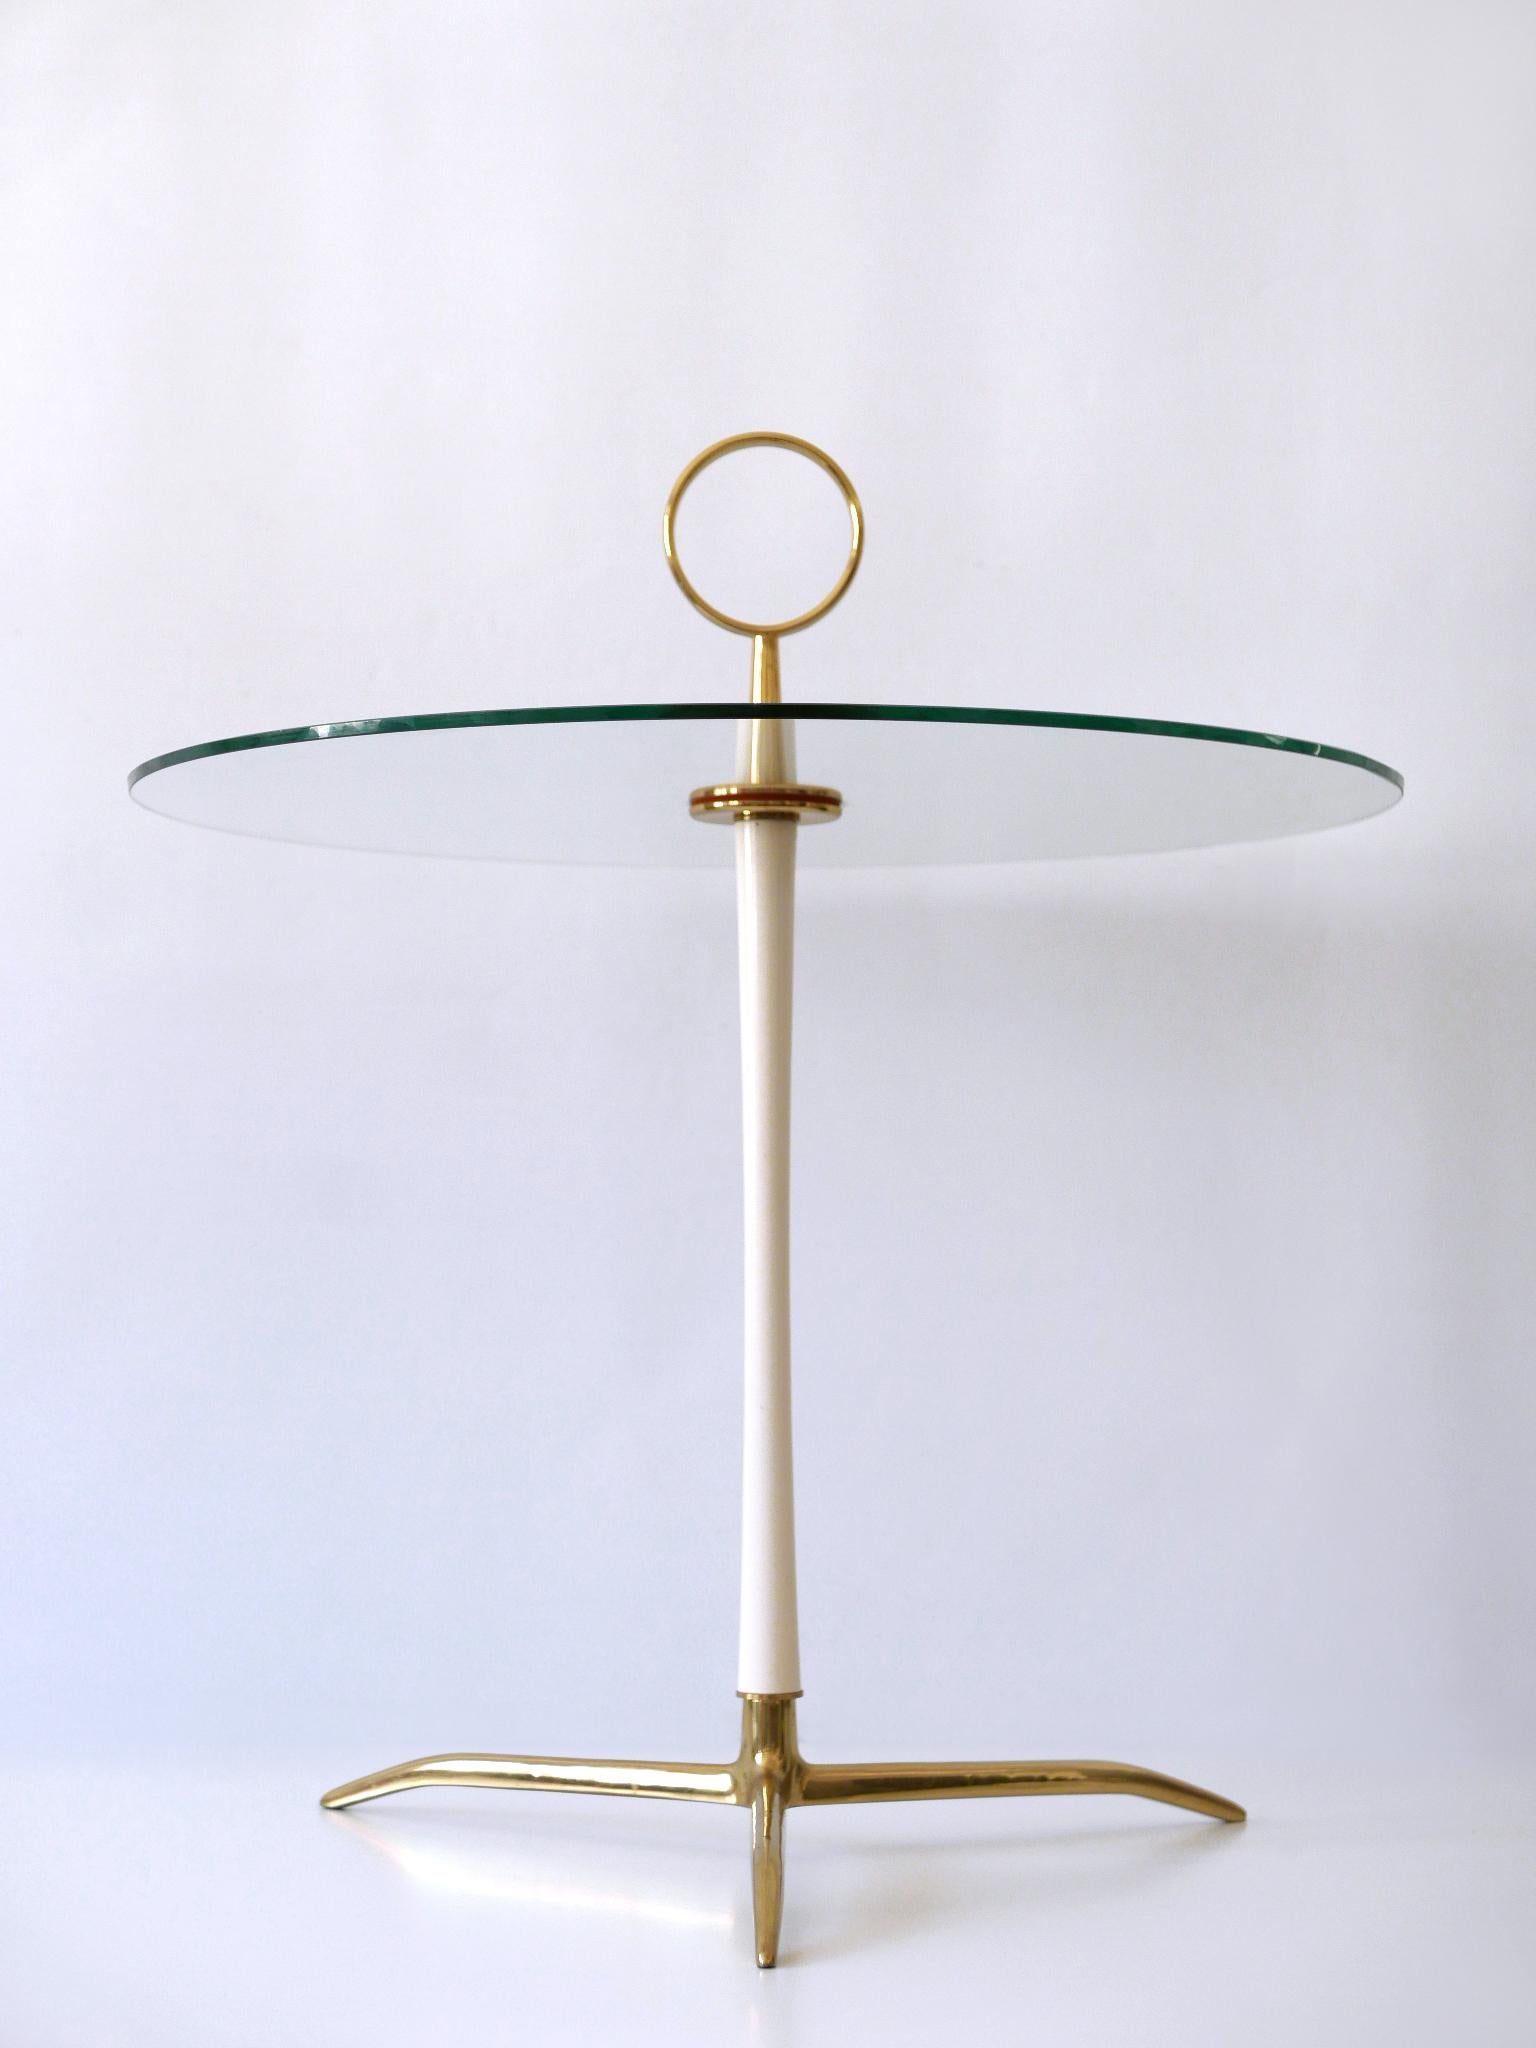 Brass Elegant Mid-Century Modern Side Table by Vereinigte Werkstätten Germany 1950s For Sale